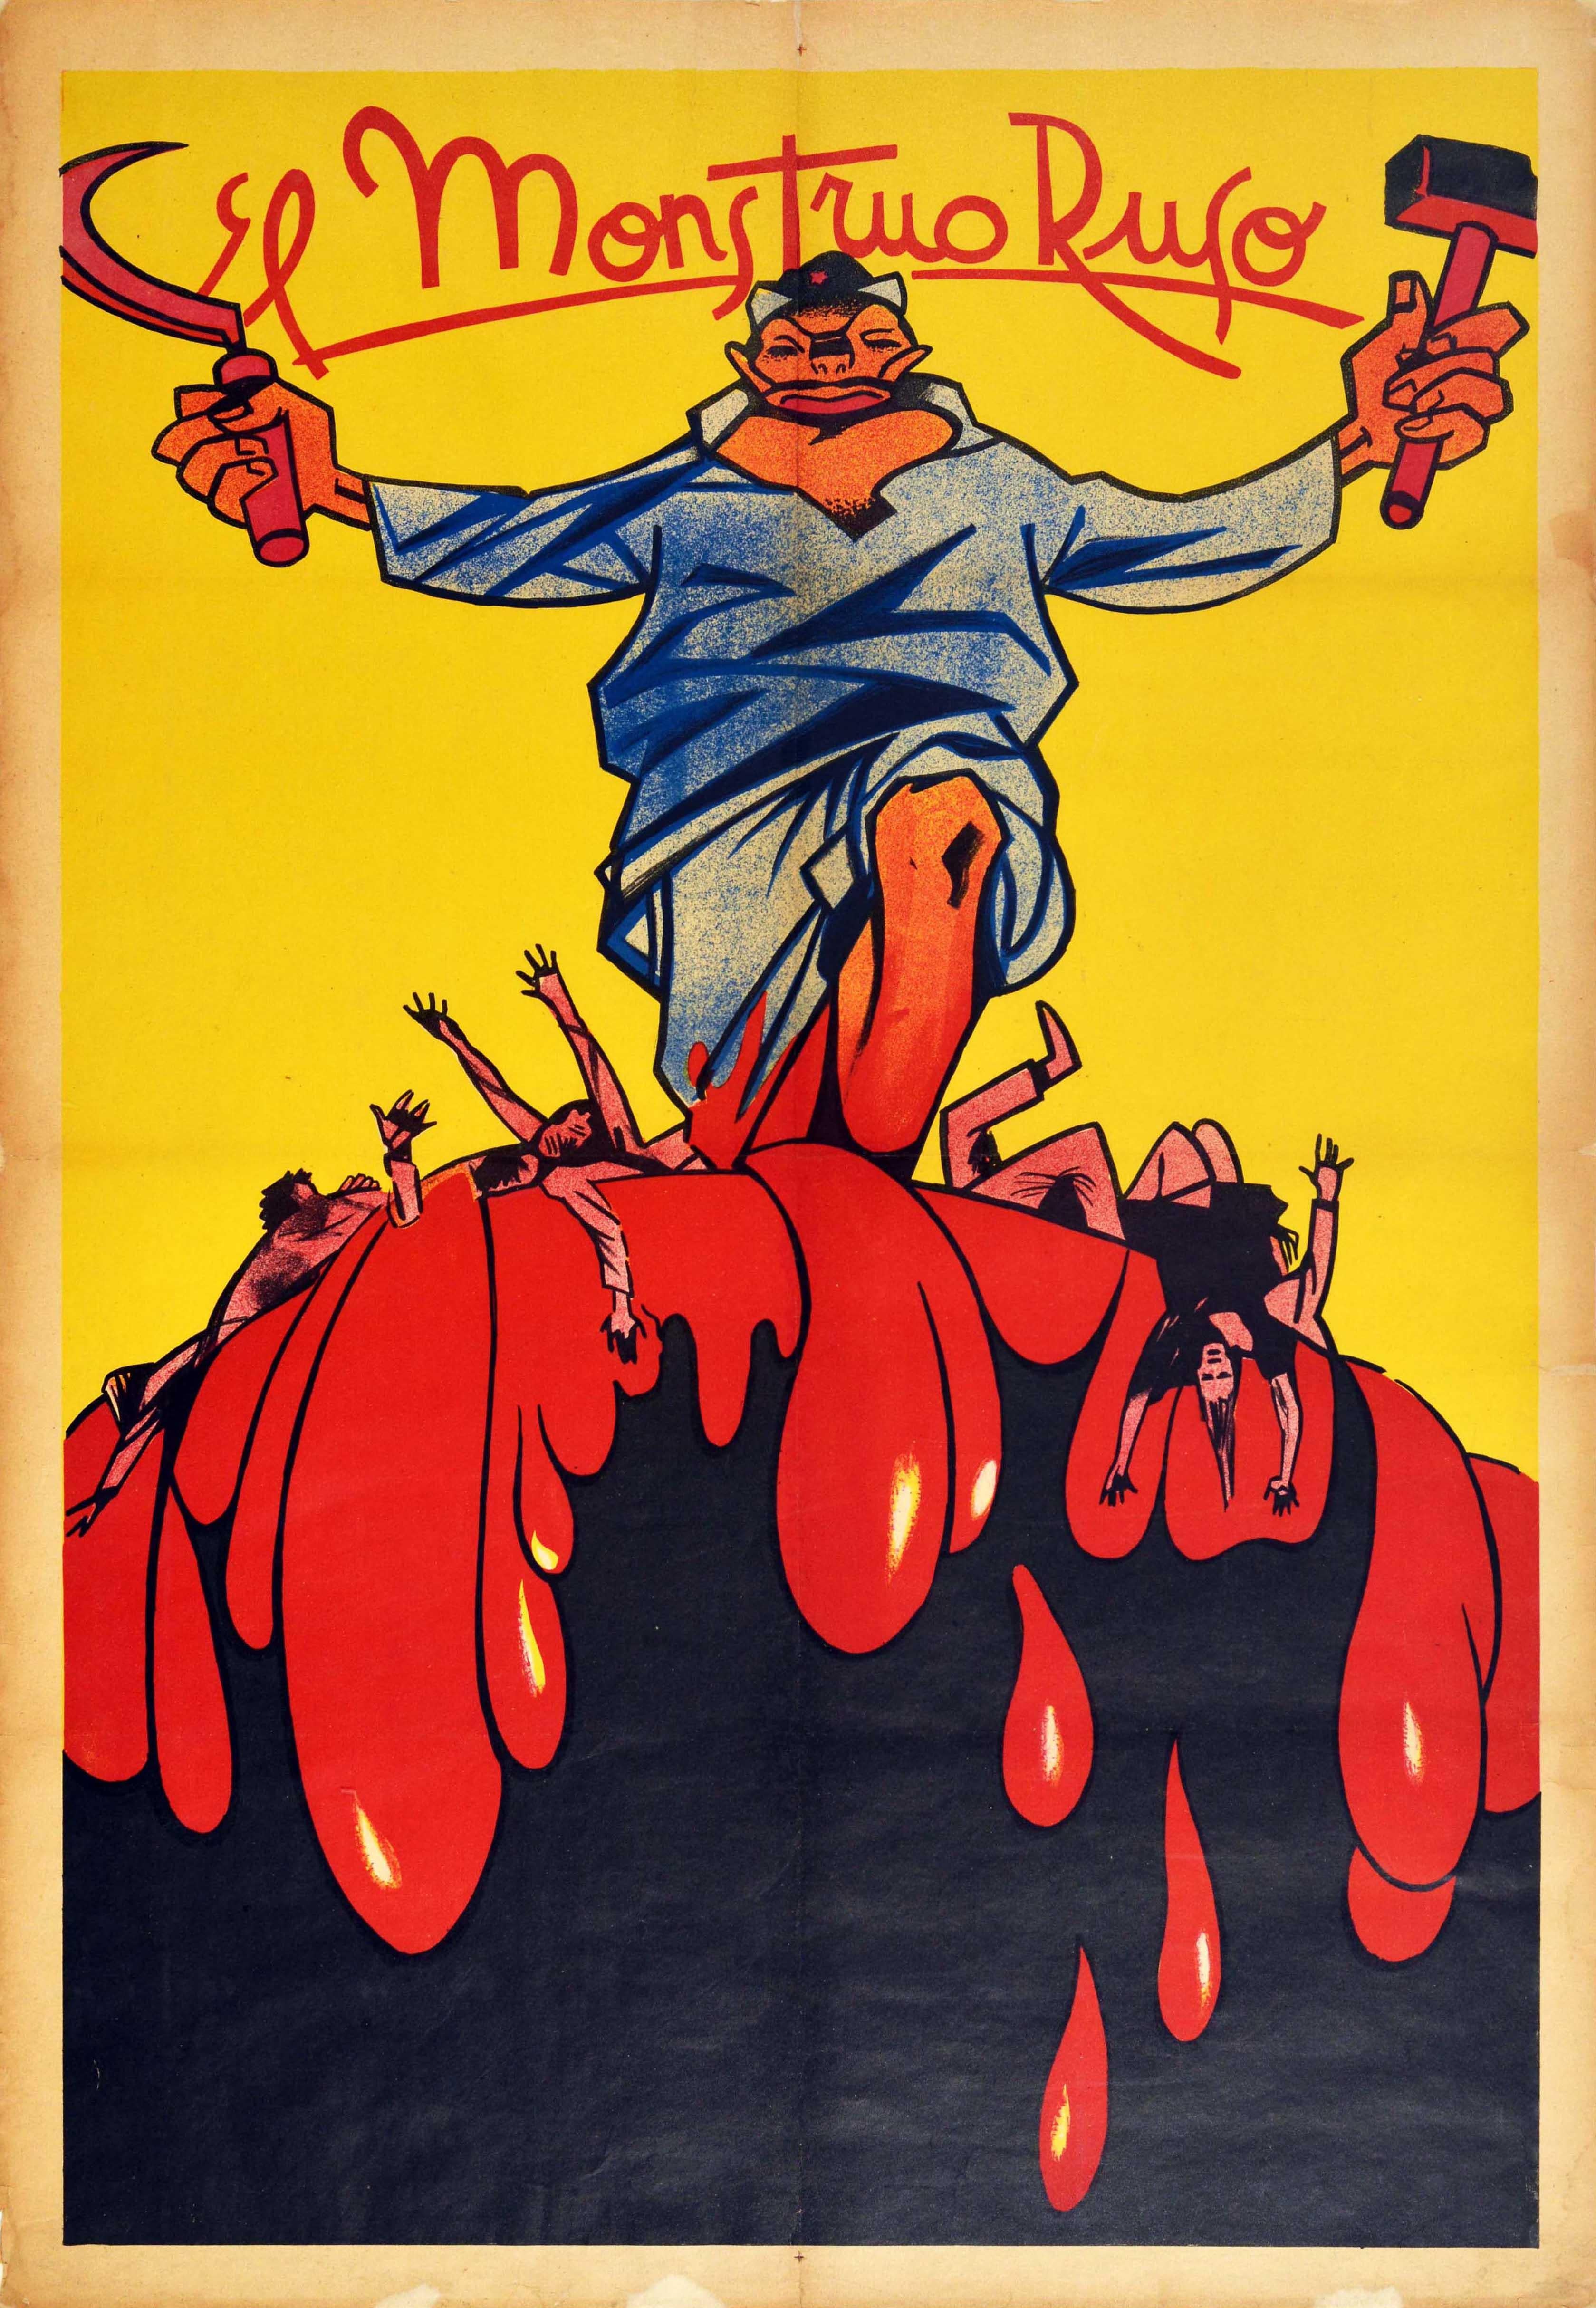 Unknown Print - Original Vintage Spanish Civil War Poster El Monstruo Ruso The Russian Monster